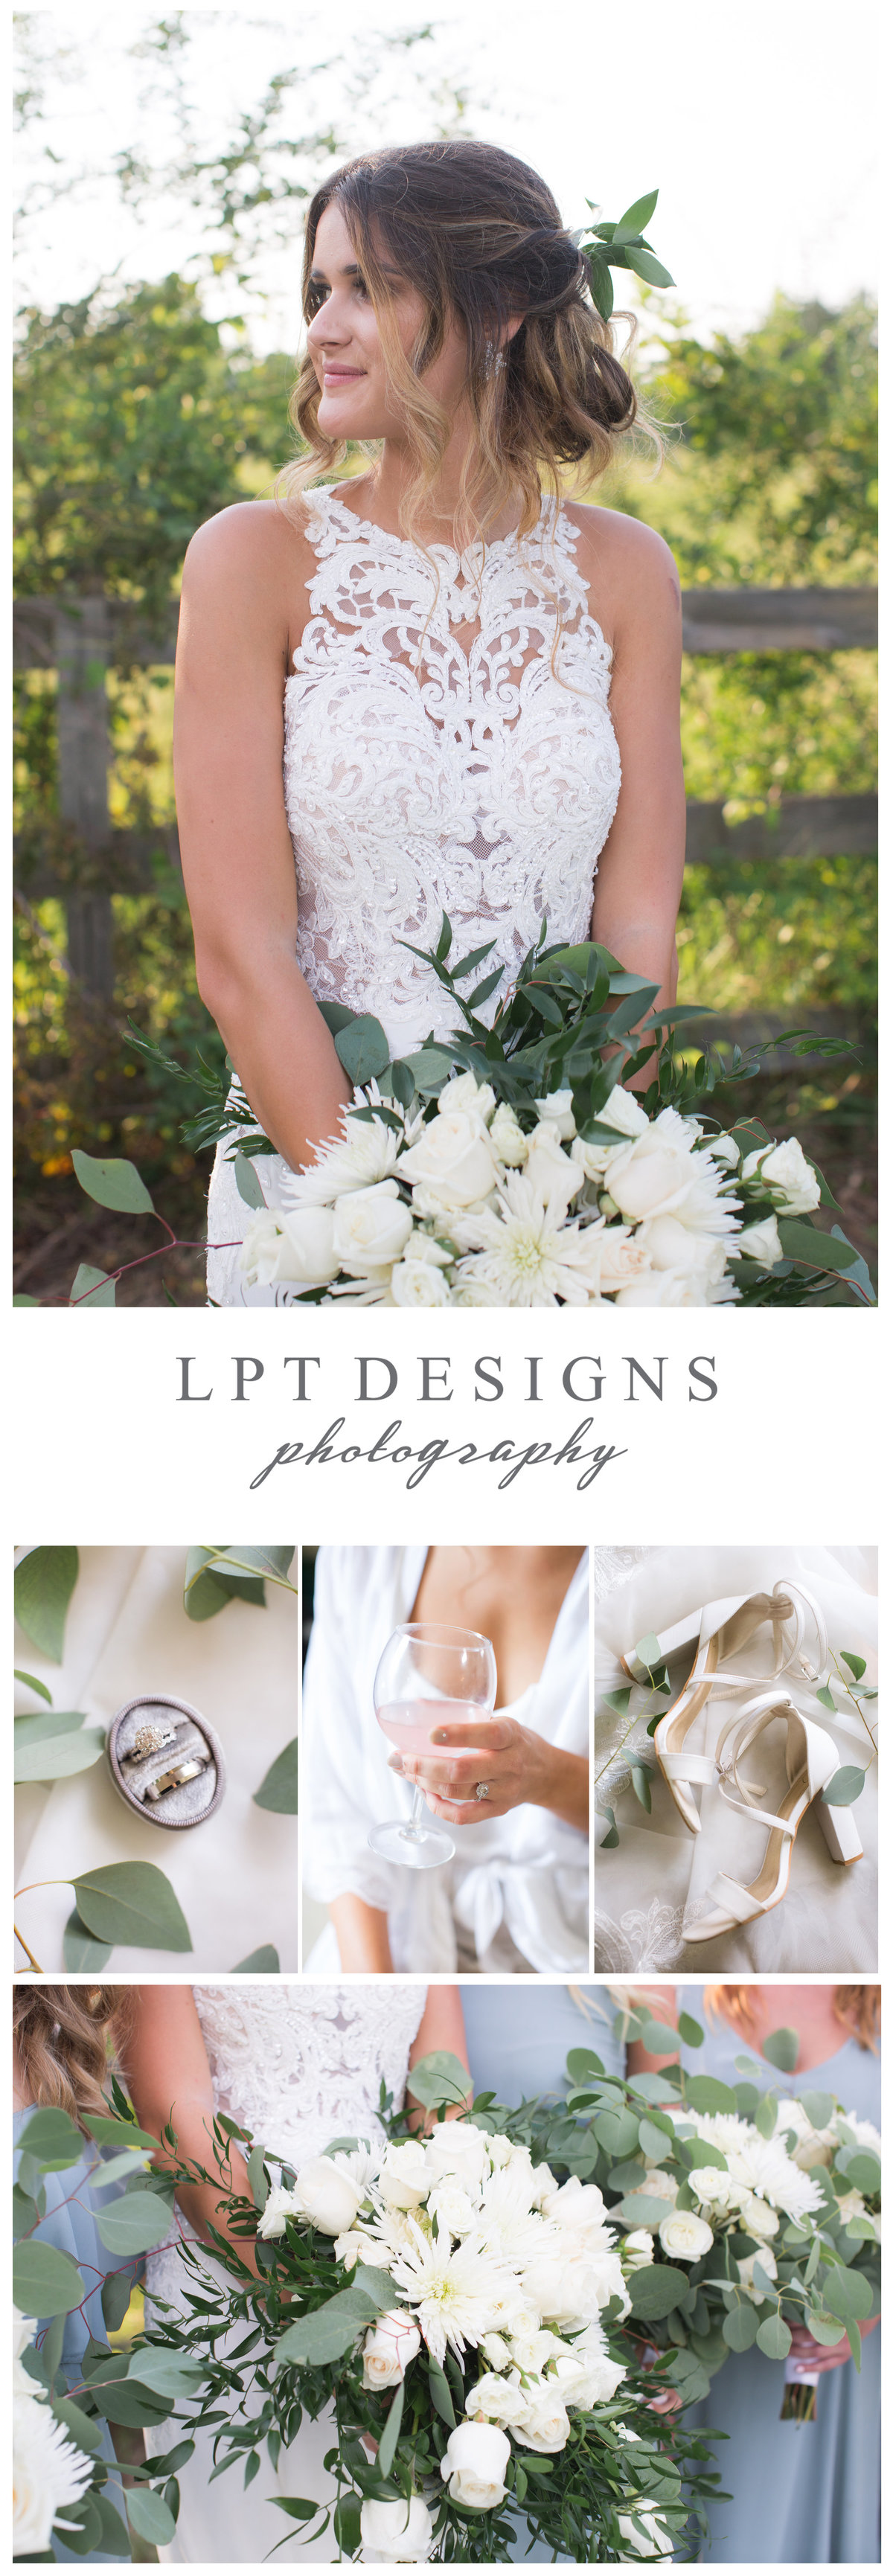 LPT Designs Photography Lydia Thrift Gadsden Alabama Fine Art Wedding Photographer LK 1